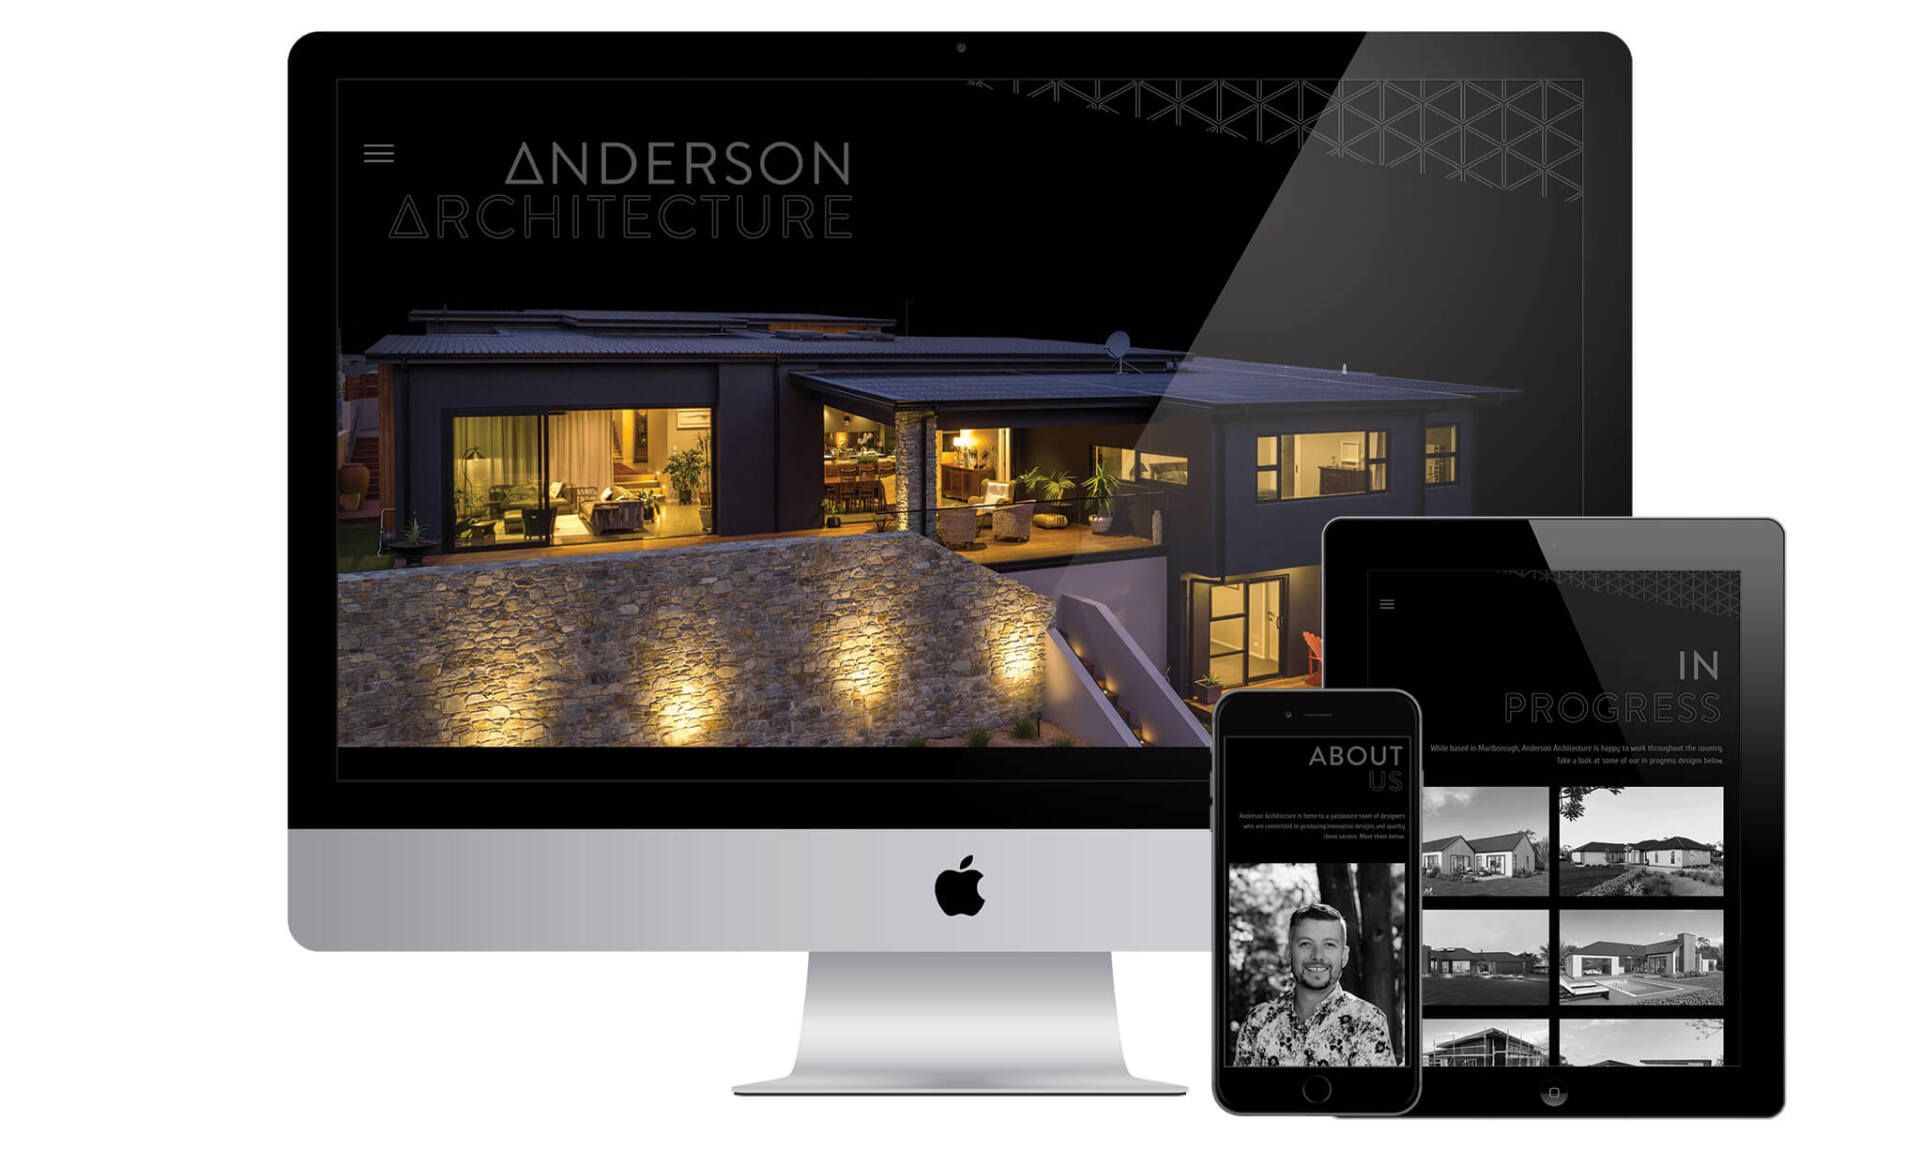 Anderson Architecture website designed by Vanilla Hayes creative graphic design  studio in Blenheim, Marlborough, New Zealand